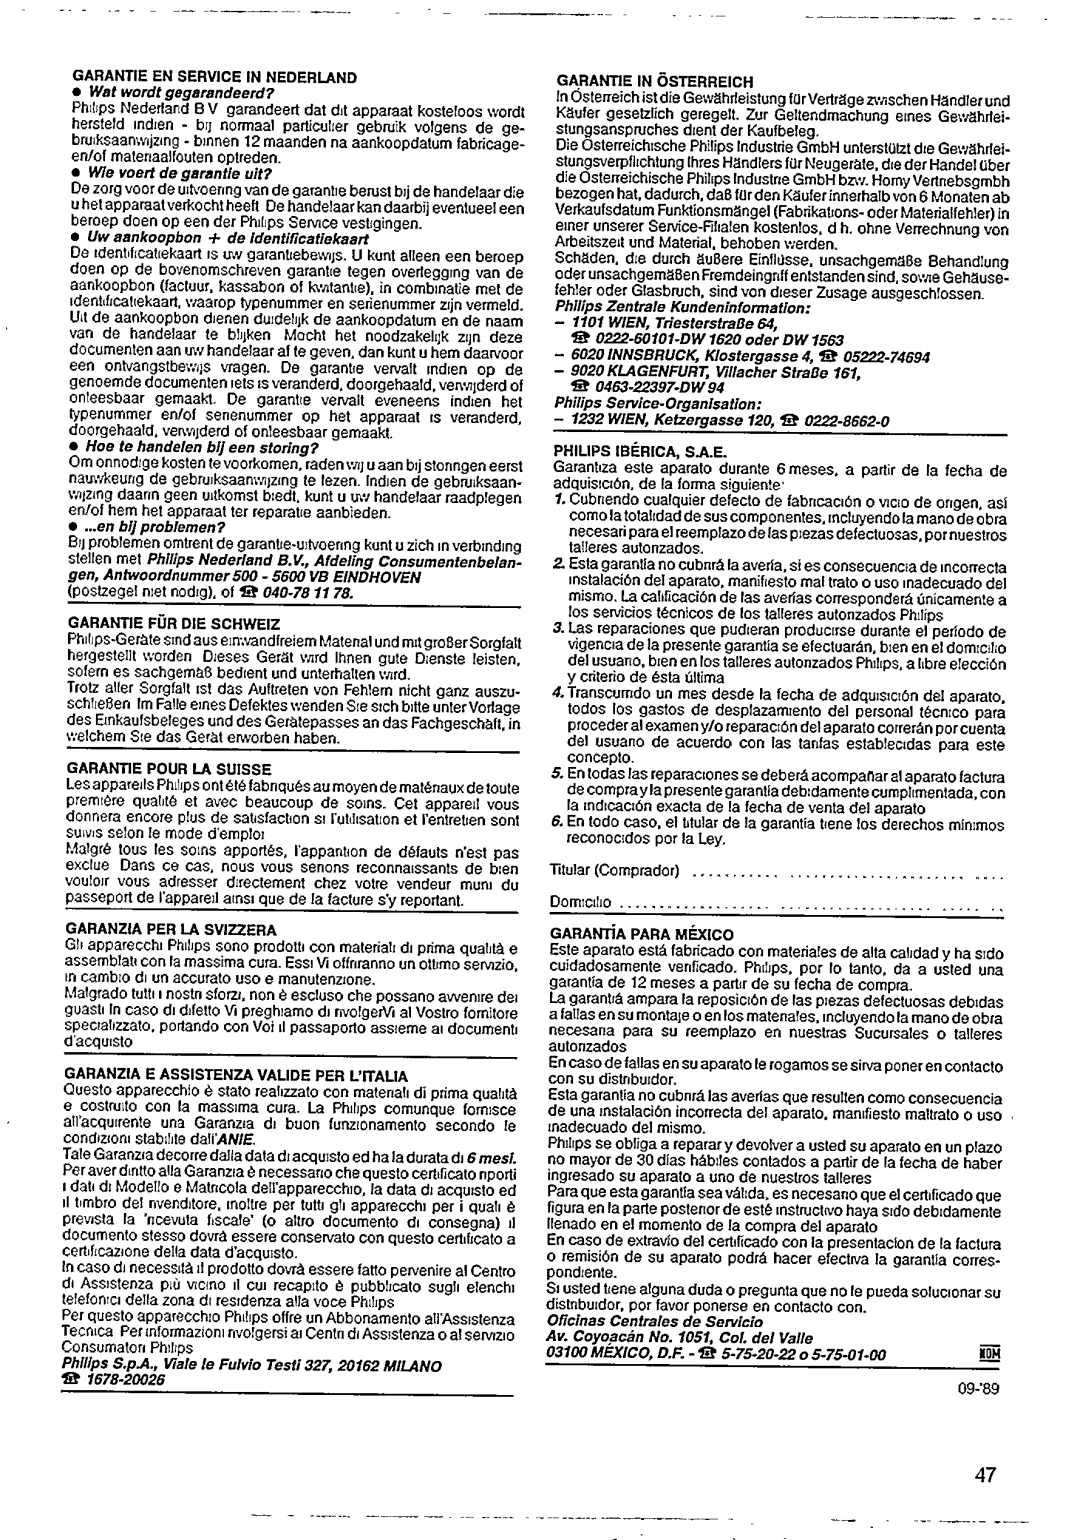 Philips AZ 6897 manual 